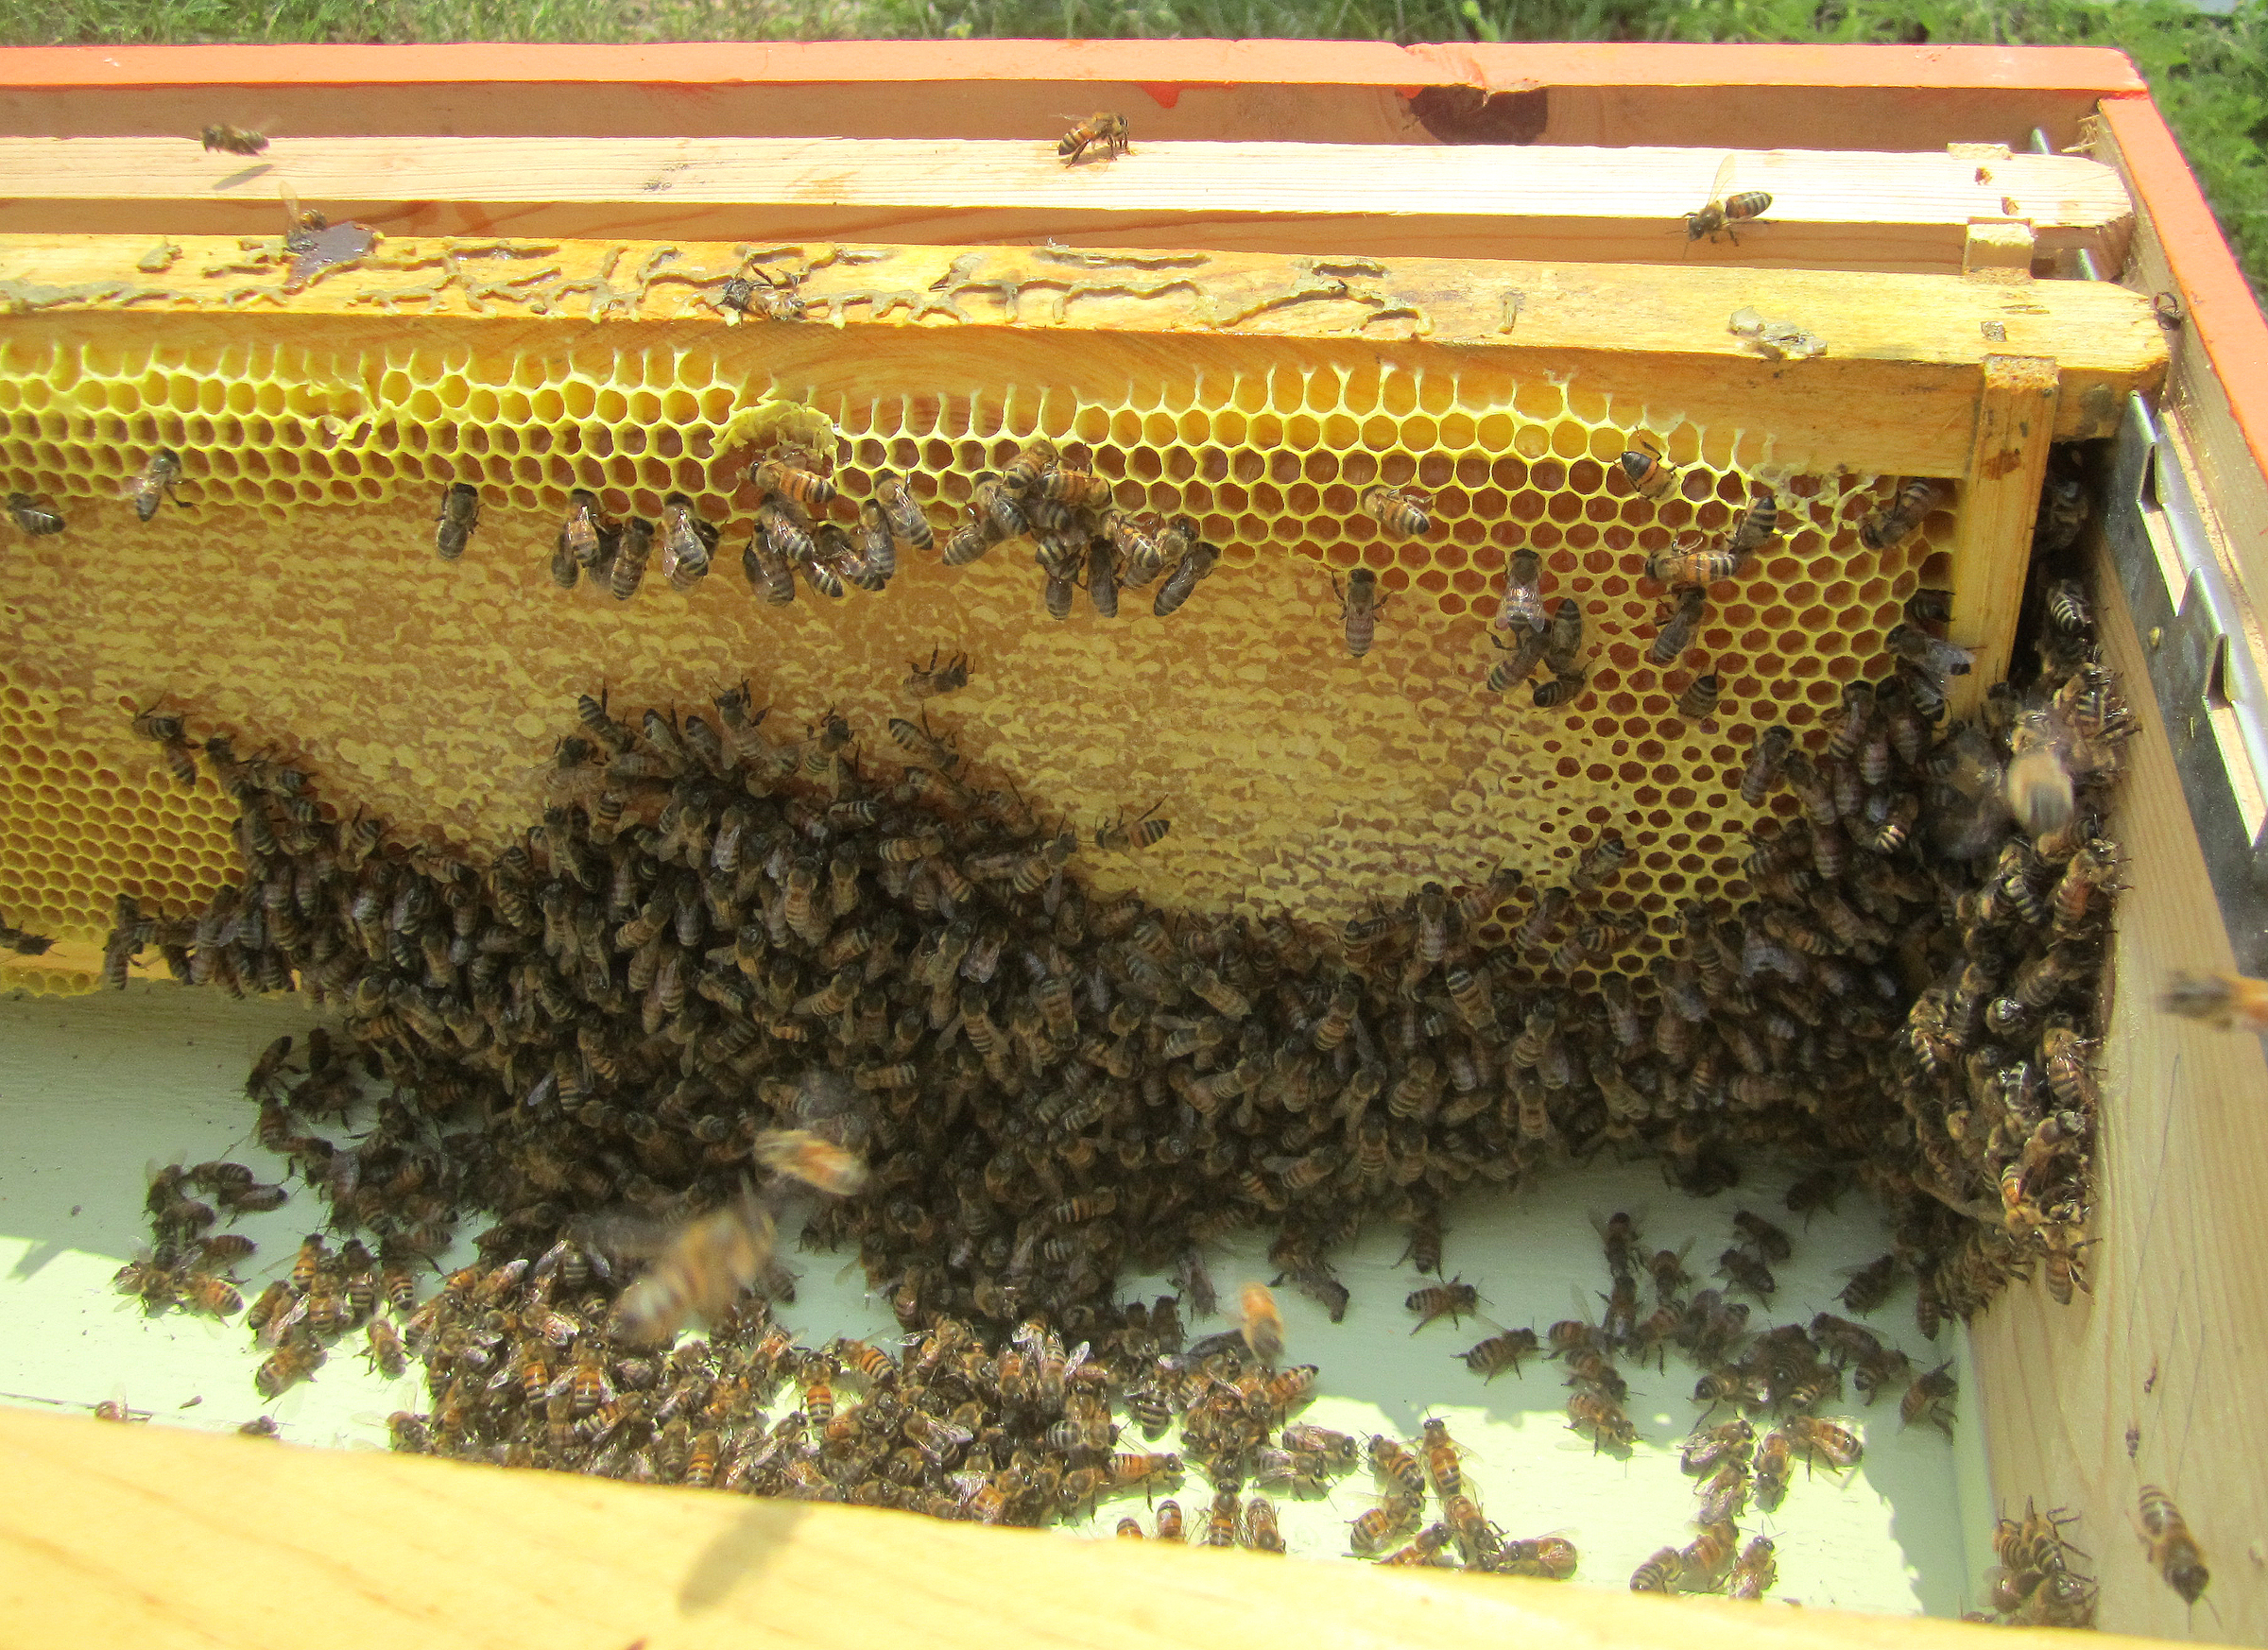 Bees filling their tummies